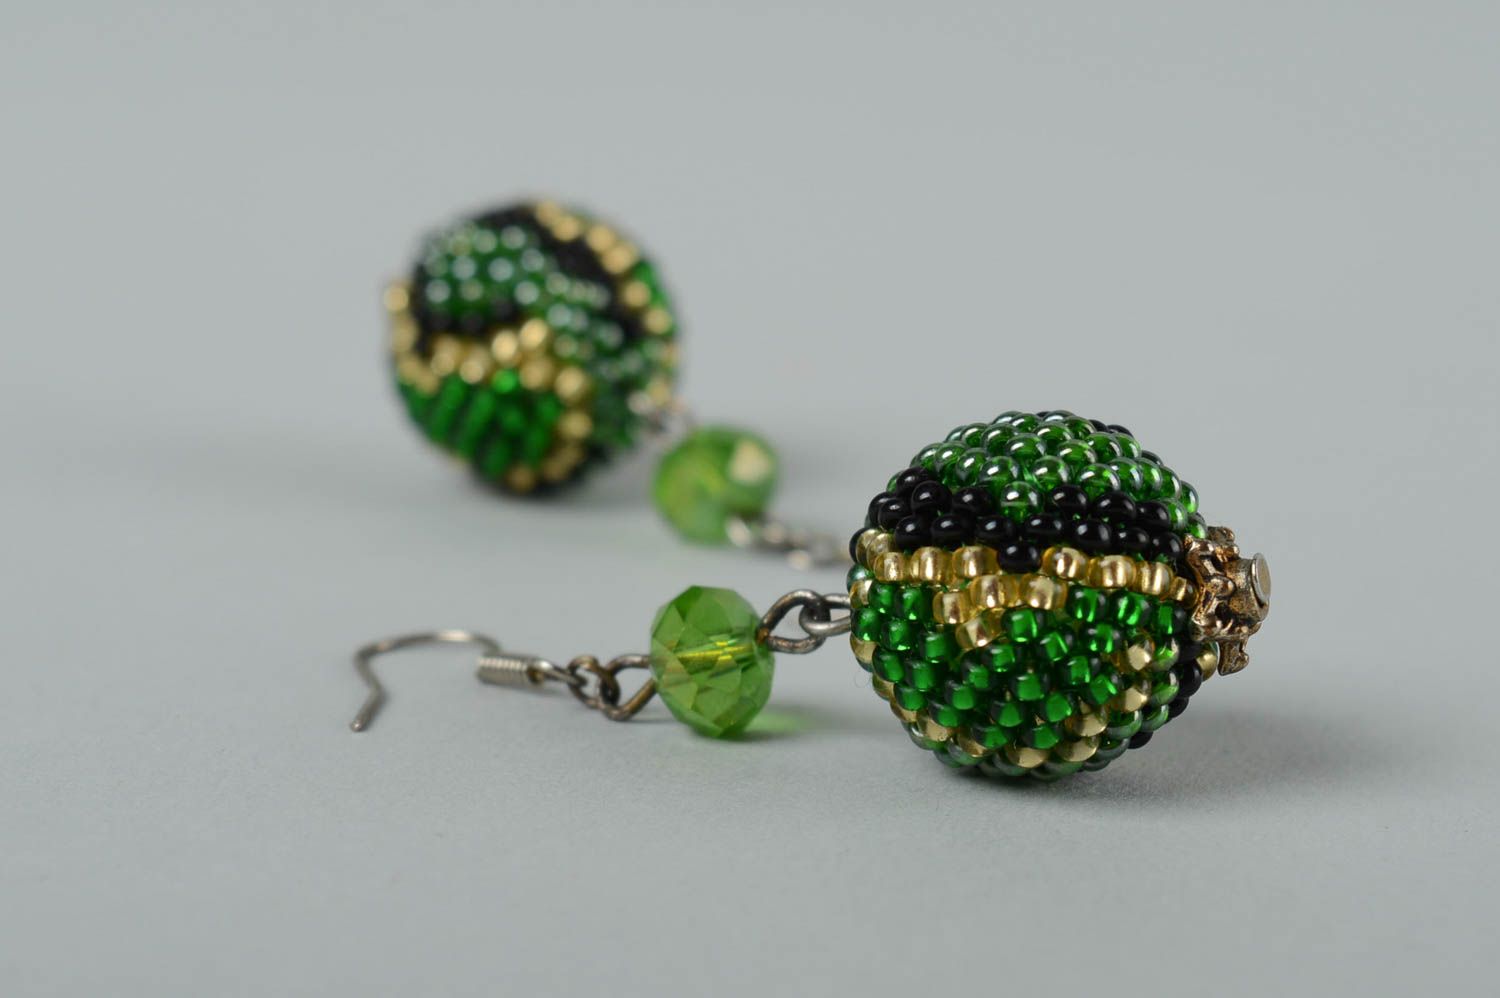 Handmade jewelry beaded earrings beautiful accessories designer earrings for her photo 4